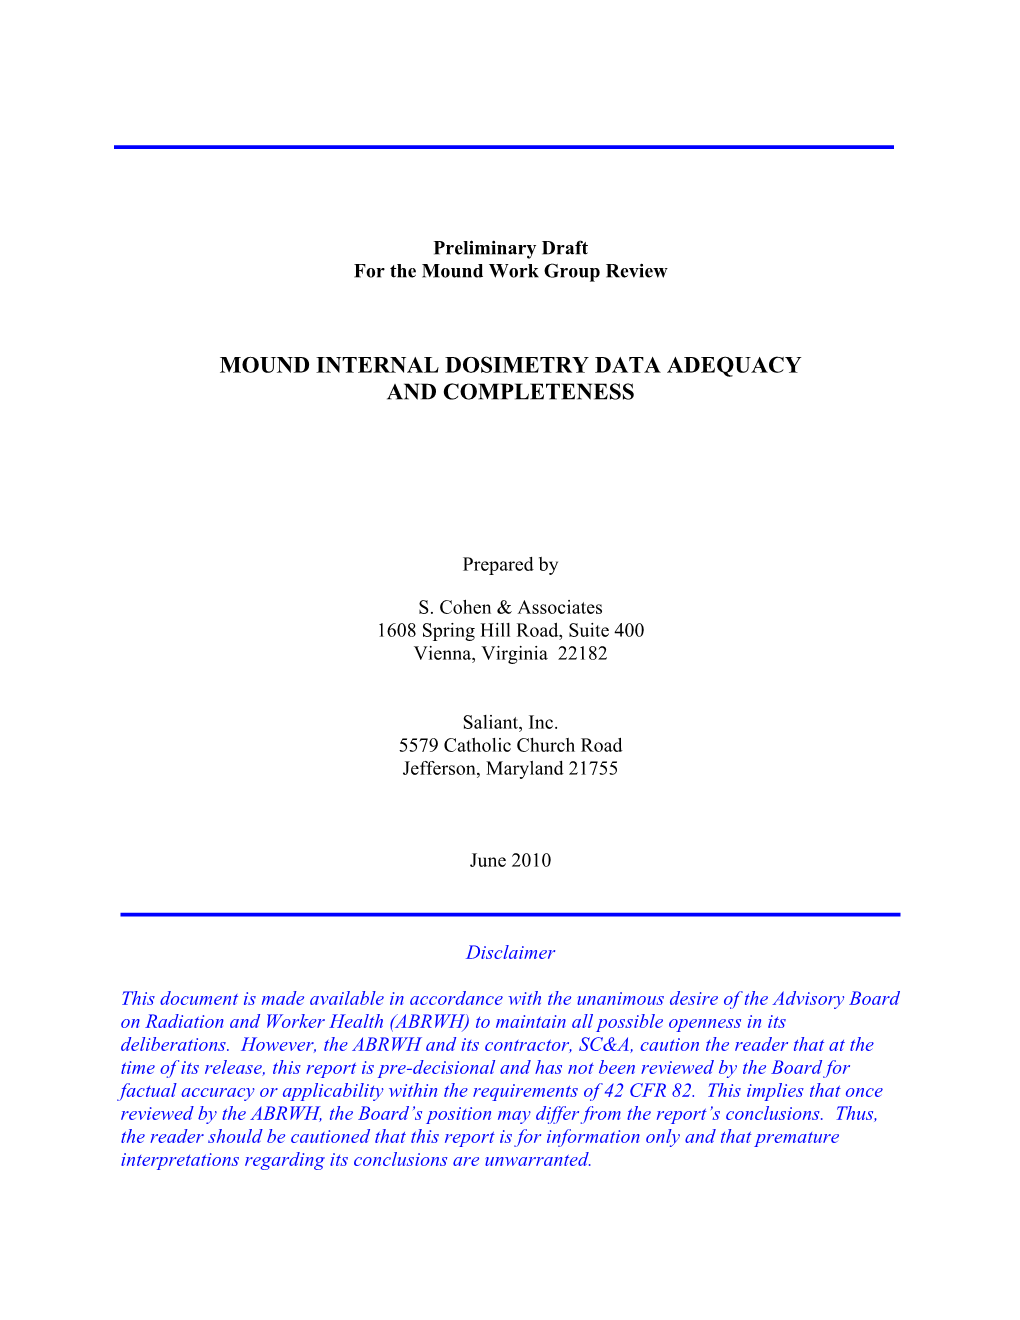 Mound Internal Dosimetry Data Adequacy and Completeness